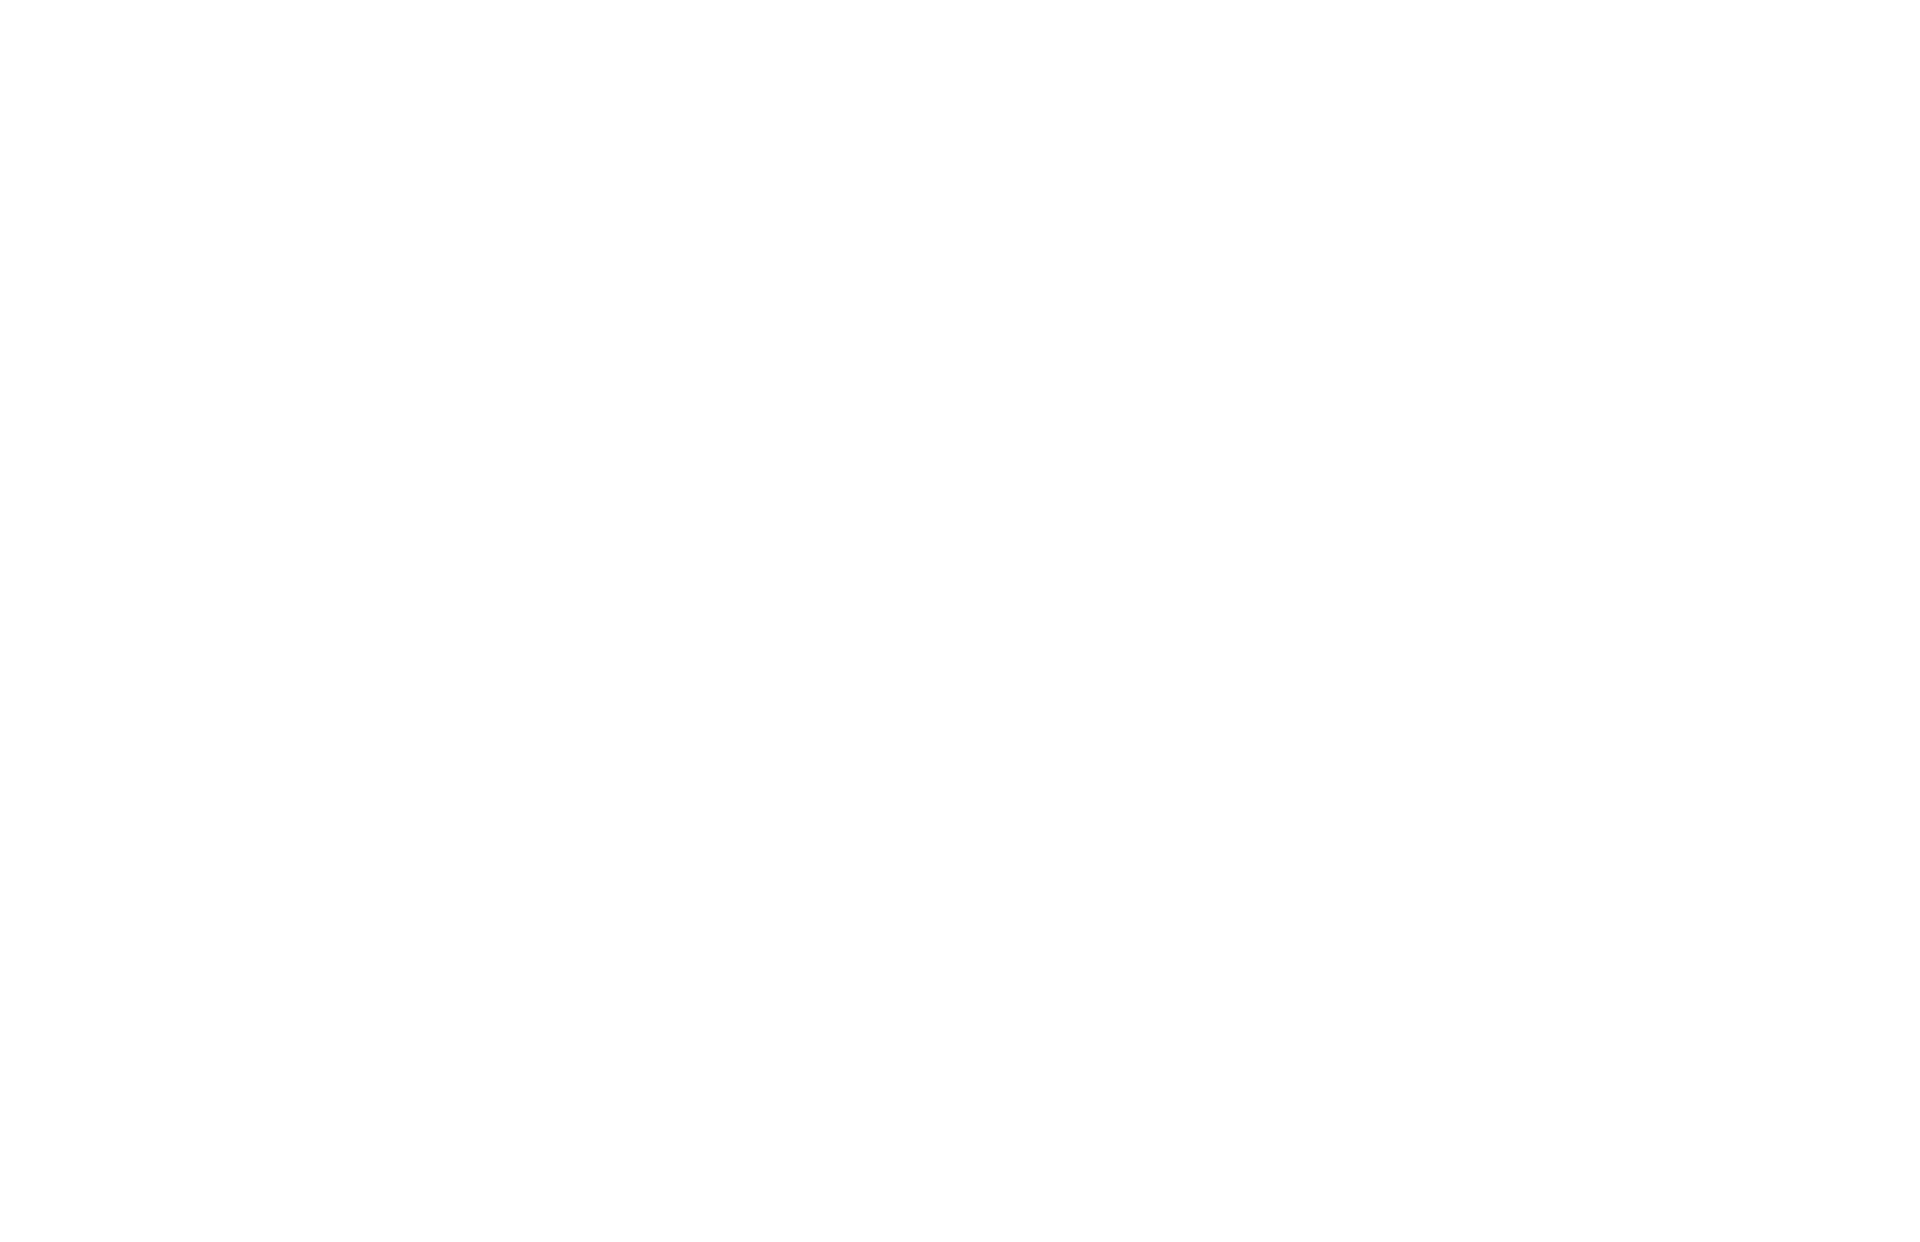 Logo of NPR Network